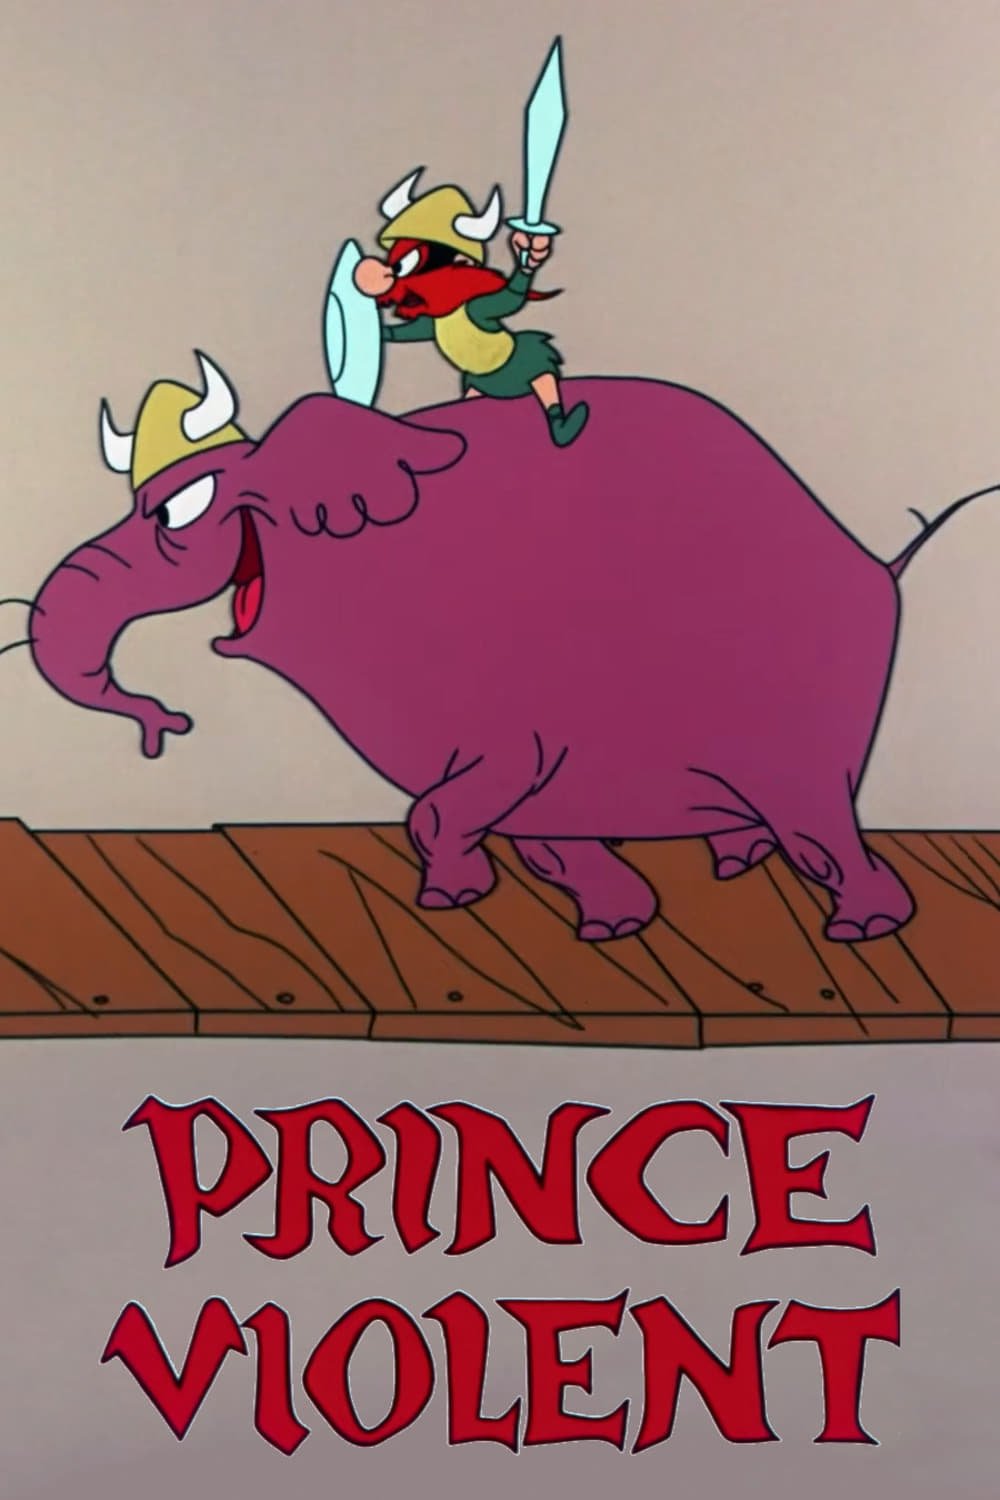 Prince Violent (1961)